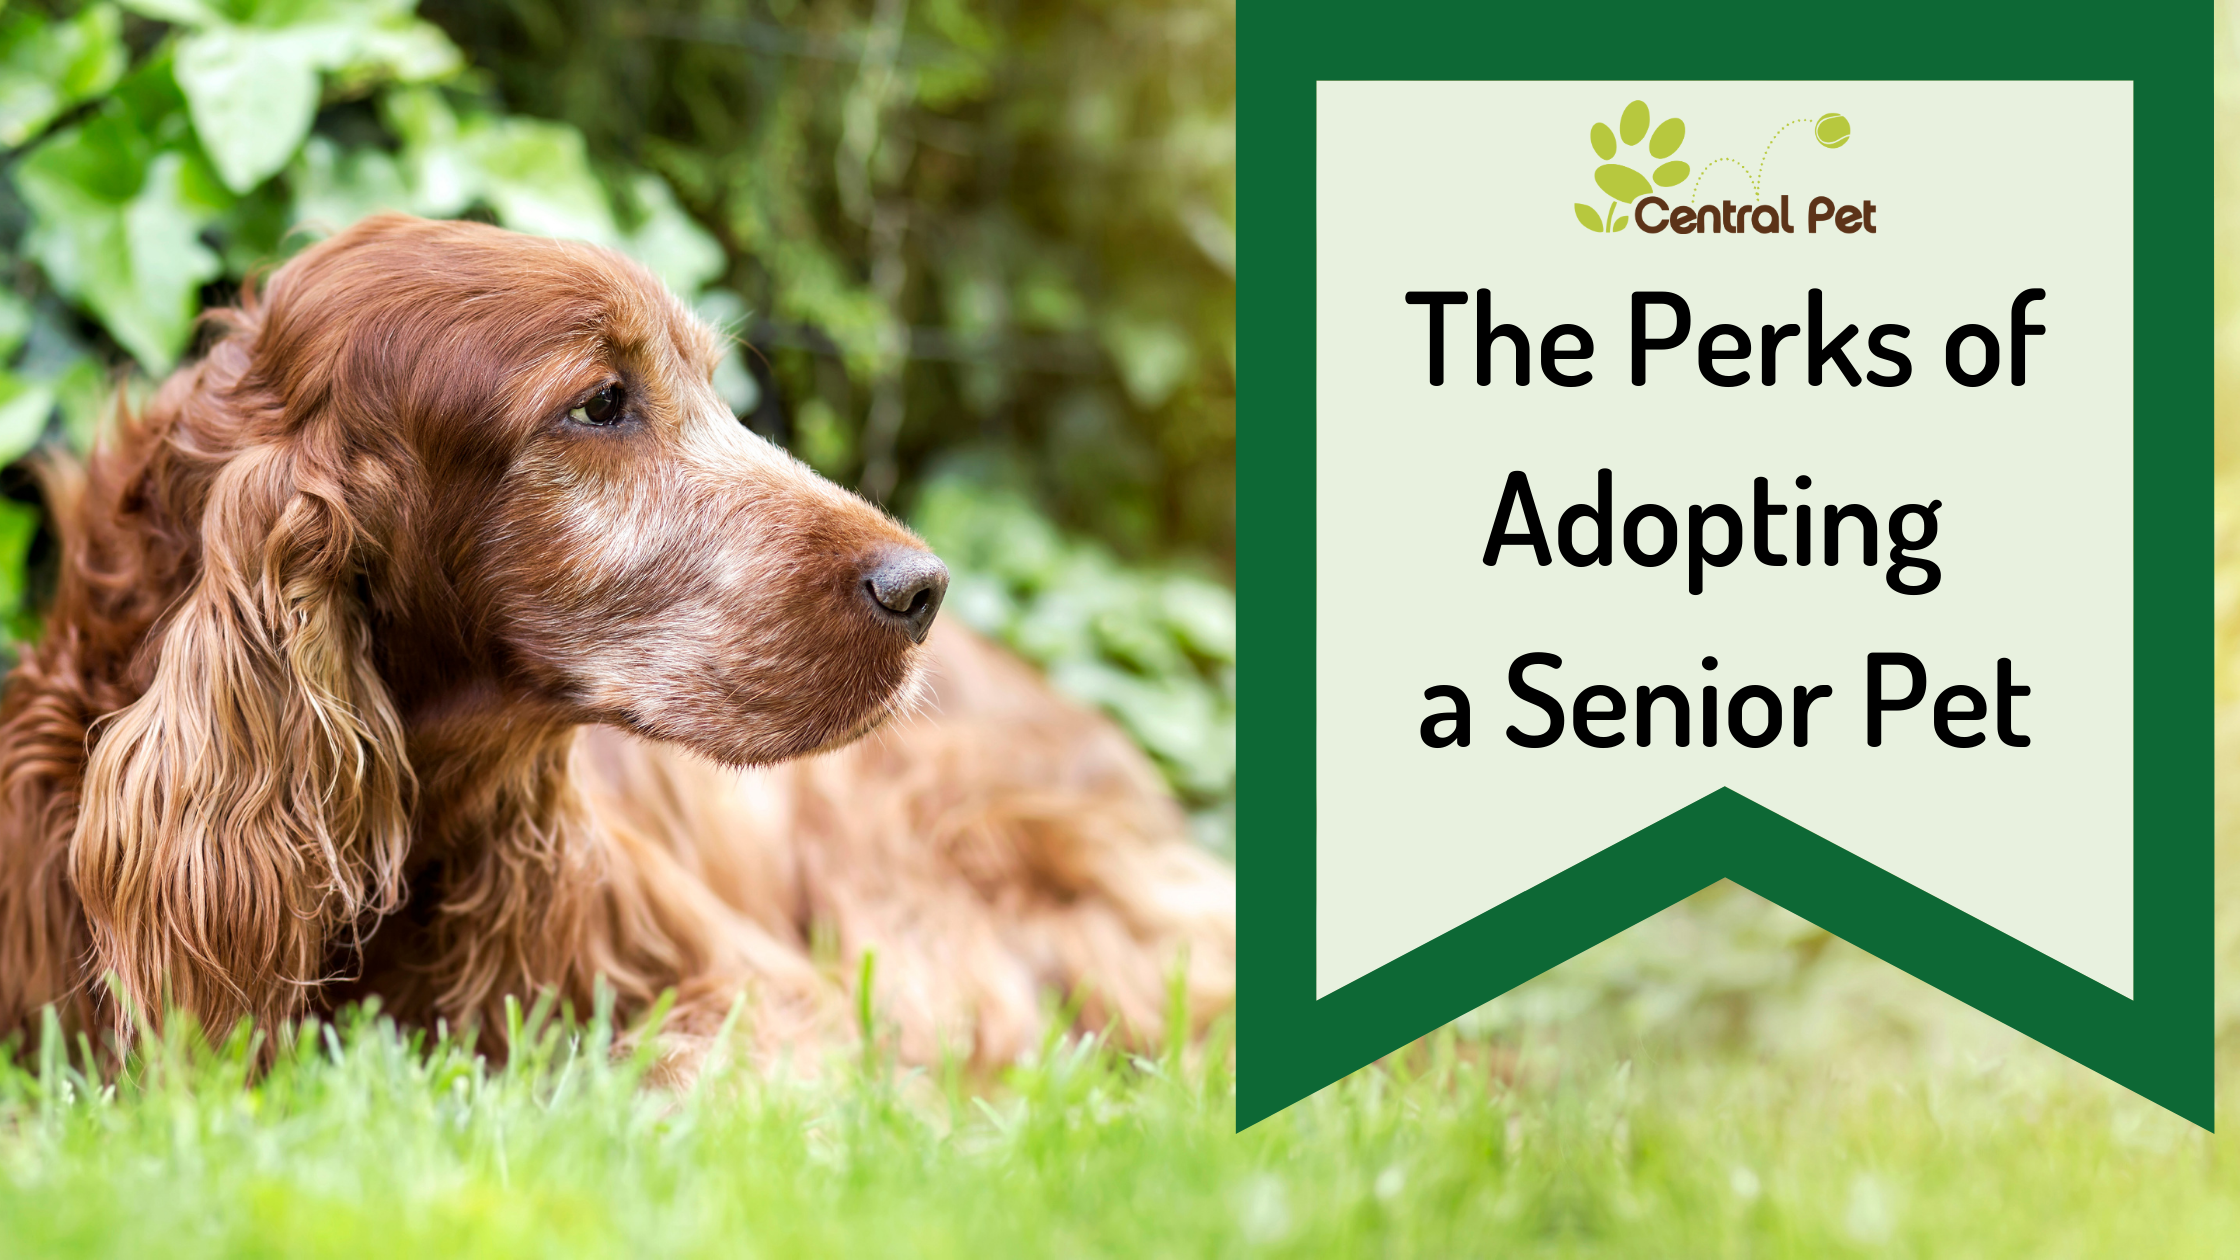 November is Adopt-a-Senior-Pet Month